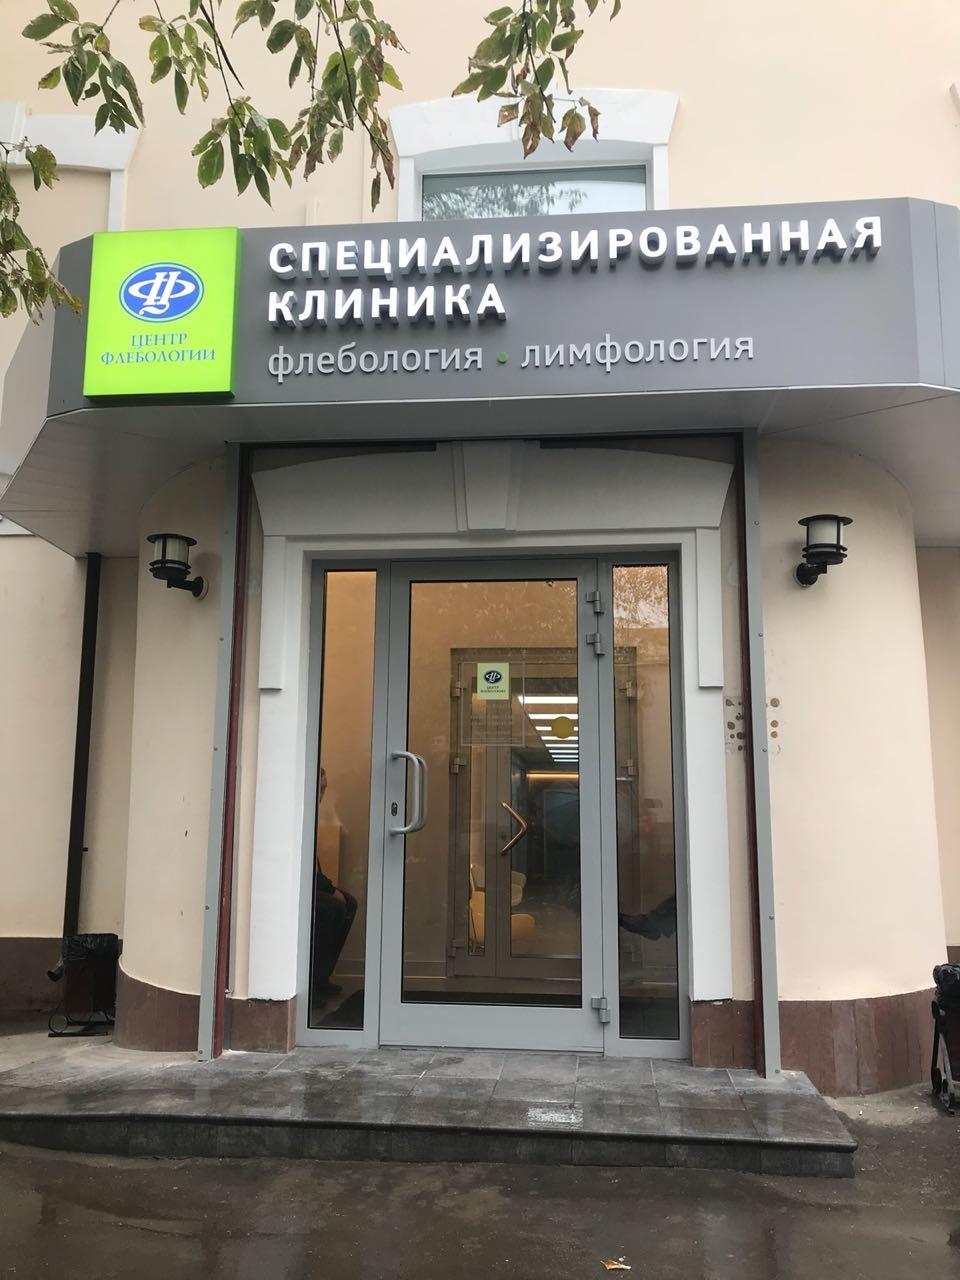 Москва клиника флебологии